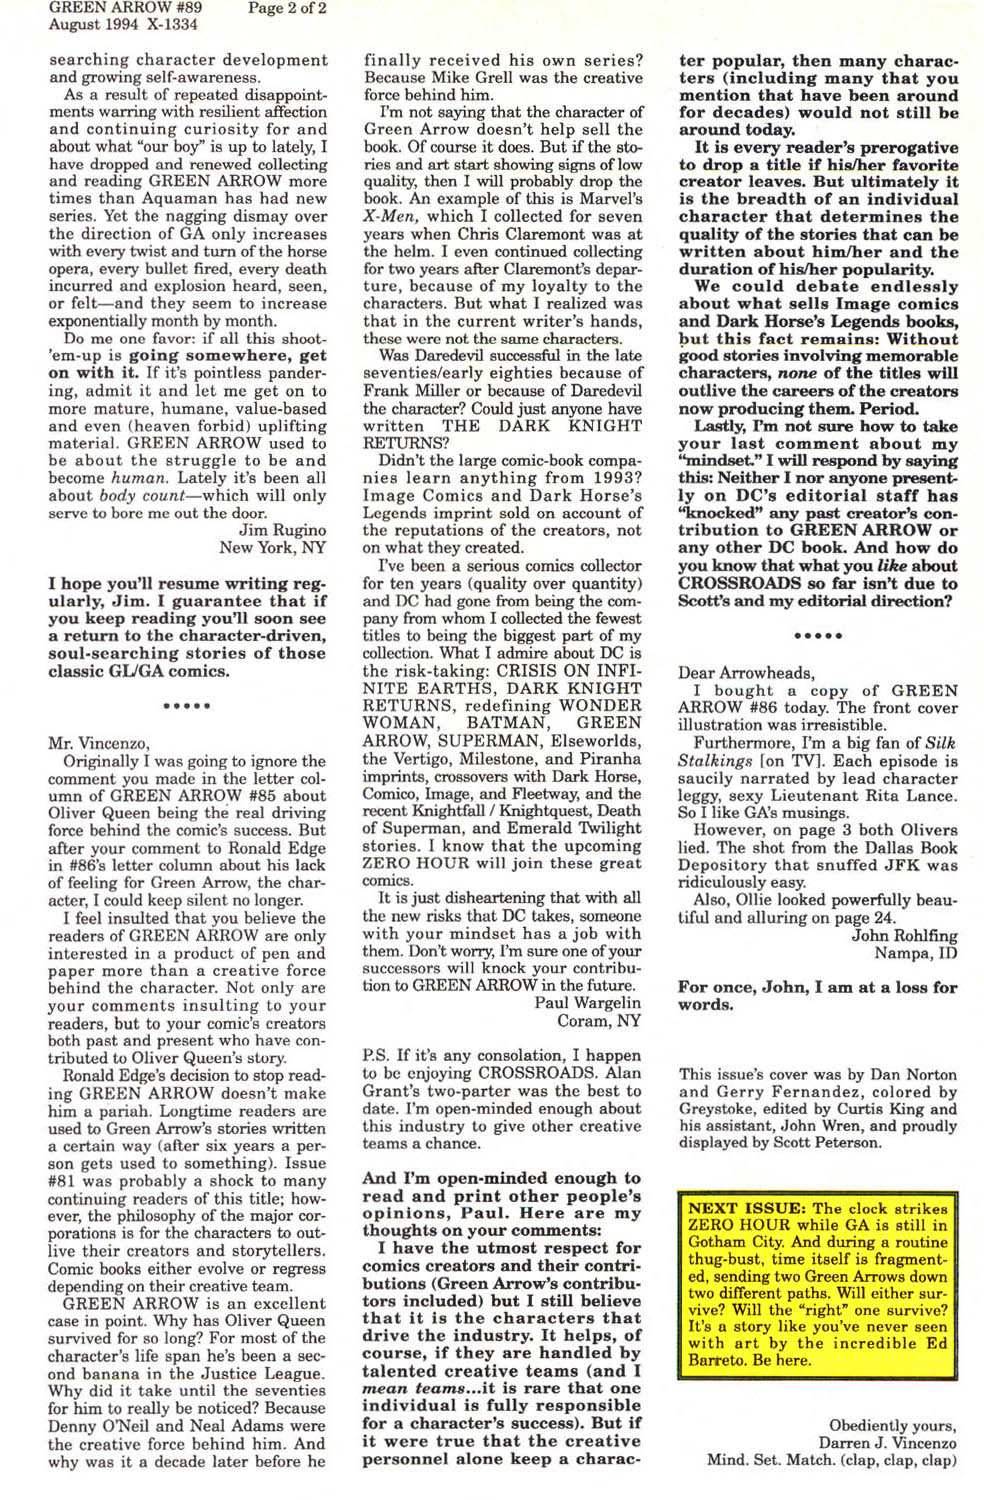 Read online Green Arrow (1988) comic -  Issue #89 - 27